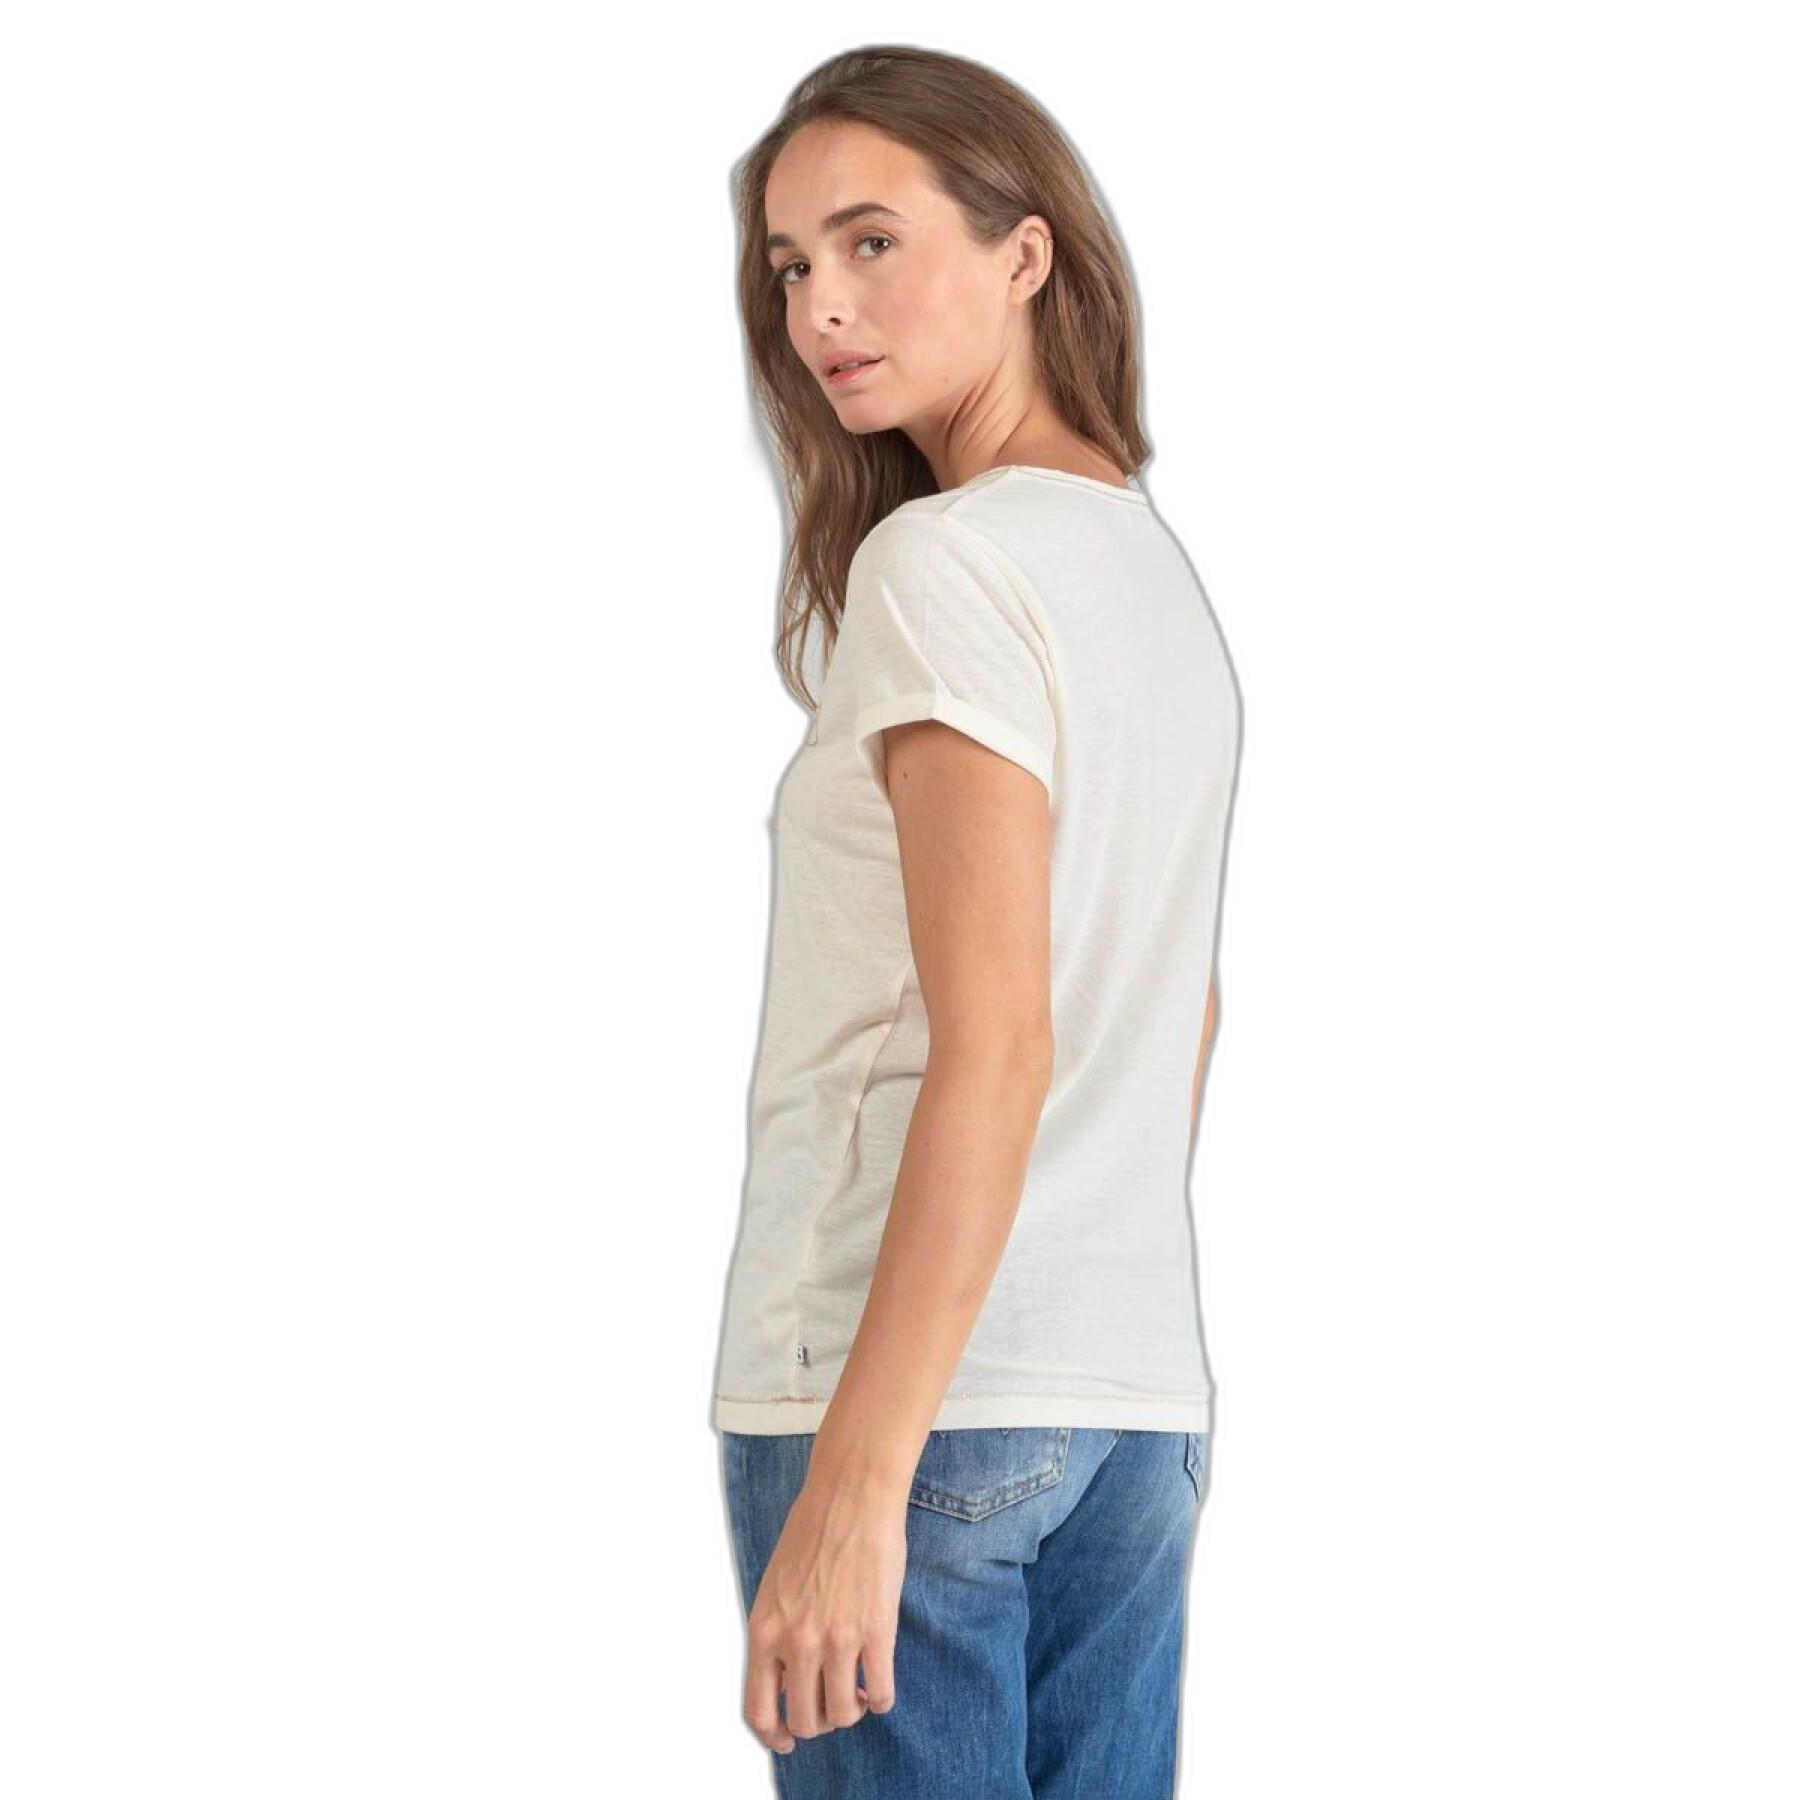 Women's T-shirt Le Temps des cerises Smallvtrame - T-shirts and tank tops -  Woman - Lifestyle